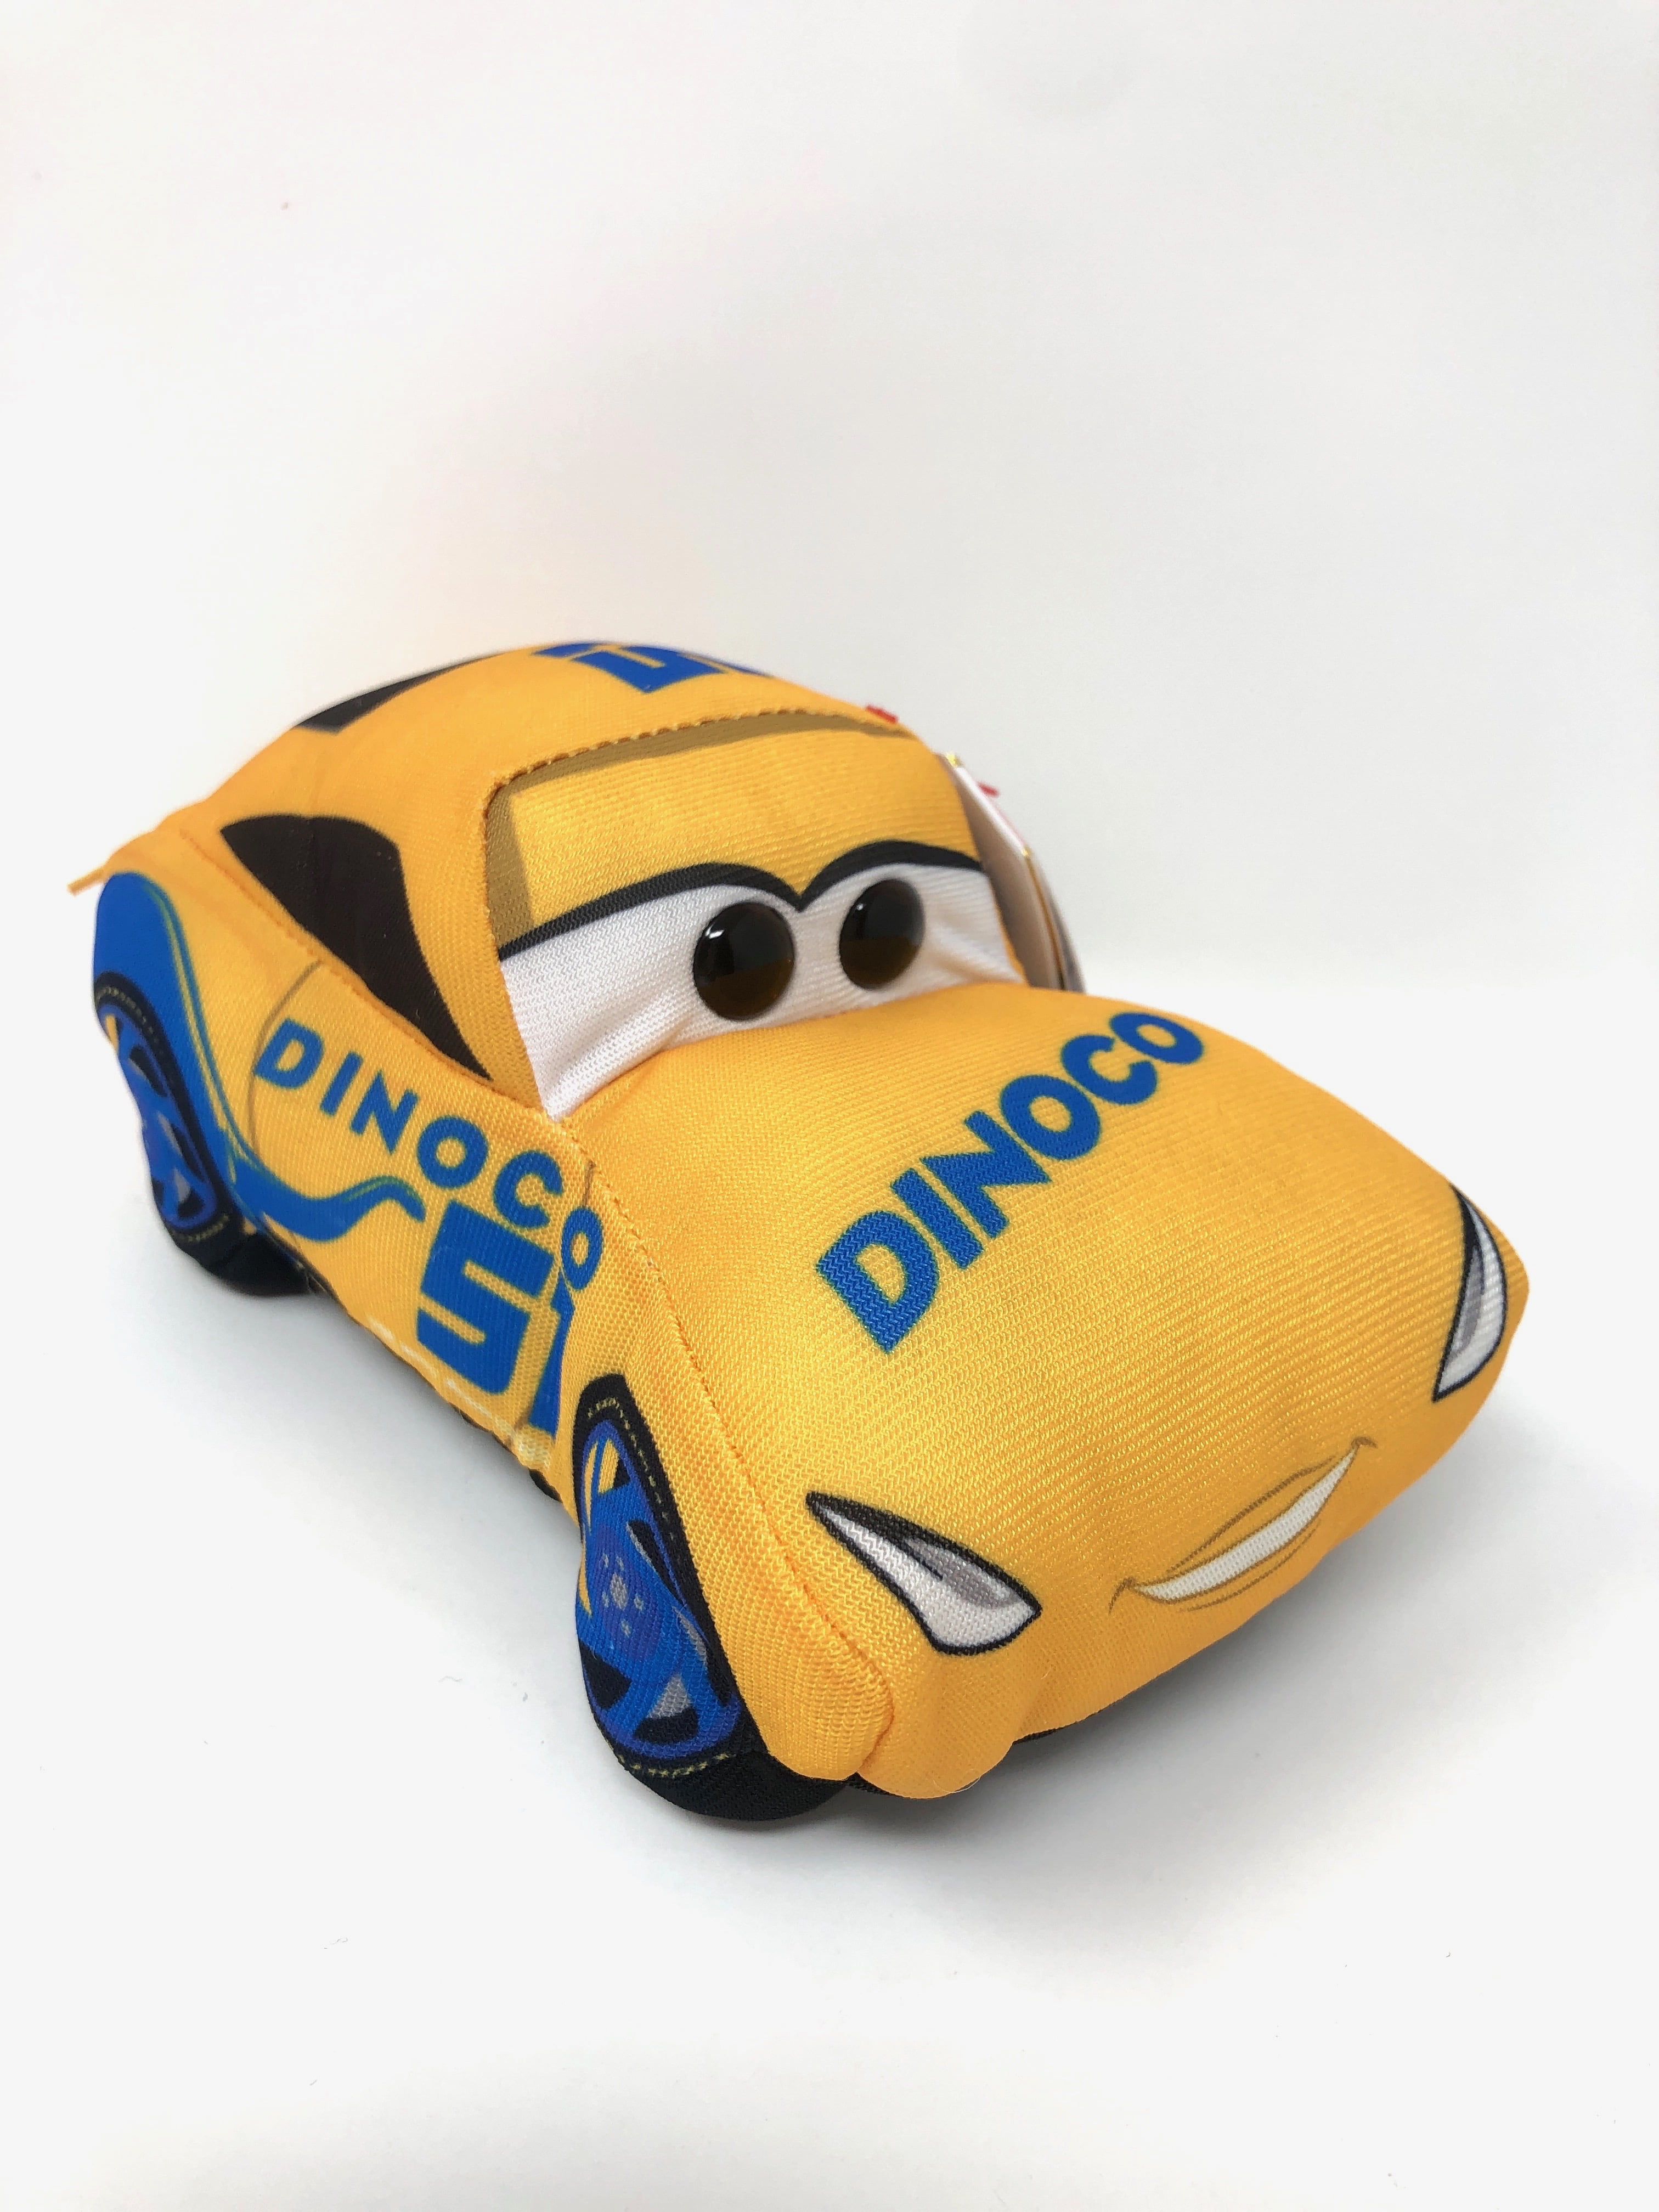 BNWT Ty Sparkle Disney Pixar Cars 3 Fabulous Lightning McQueen 7" Plush Toy Blue 